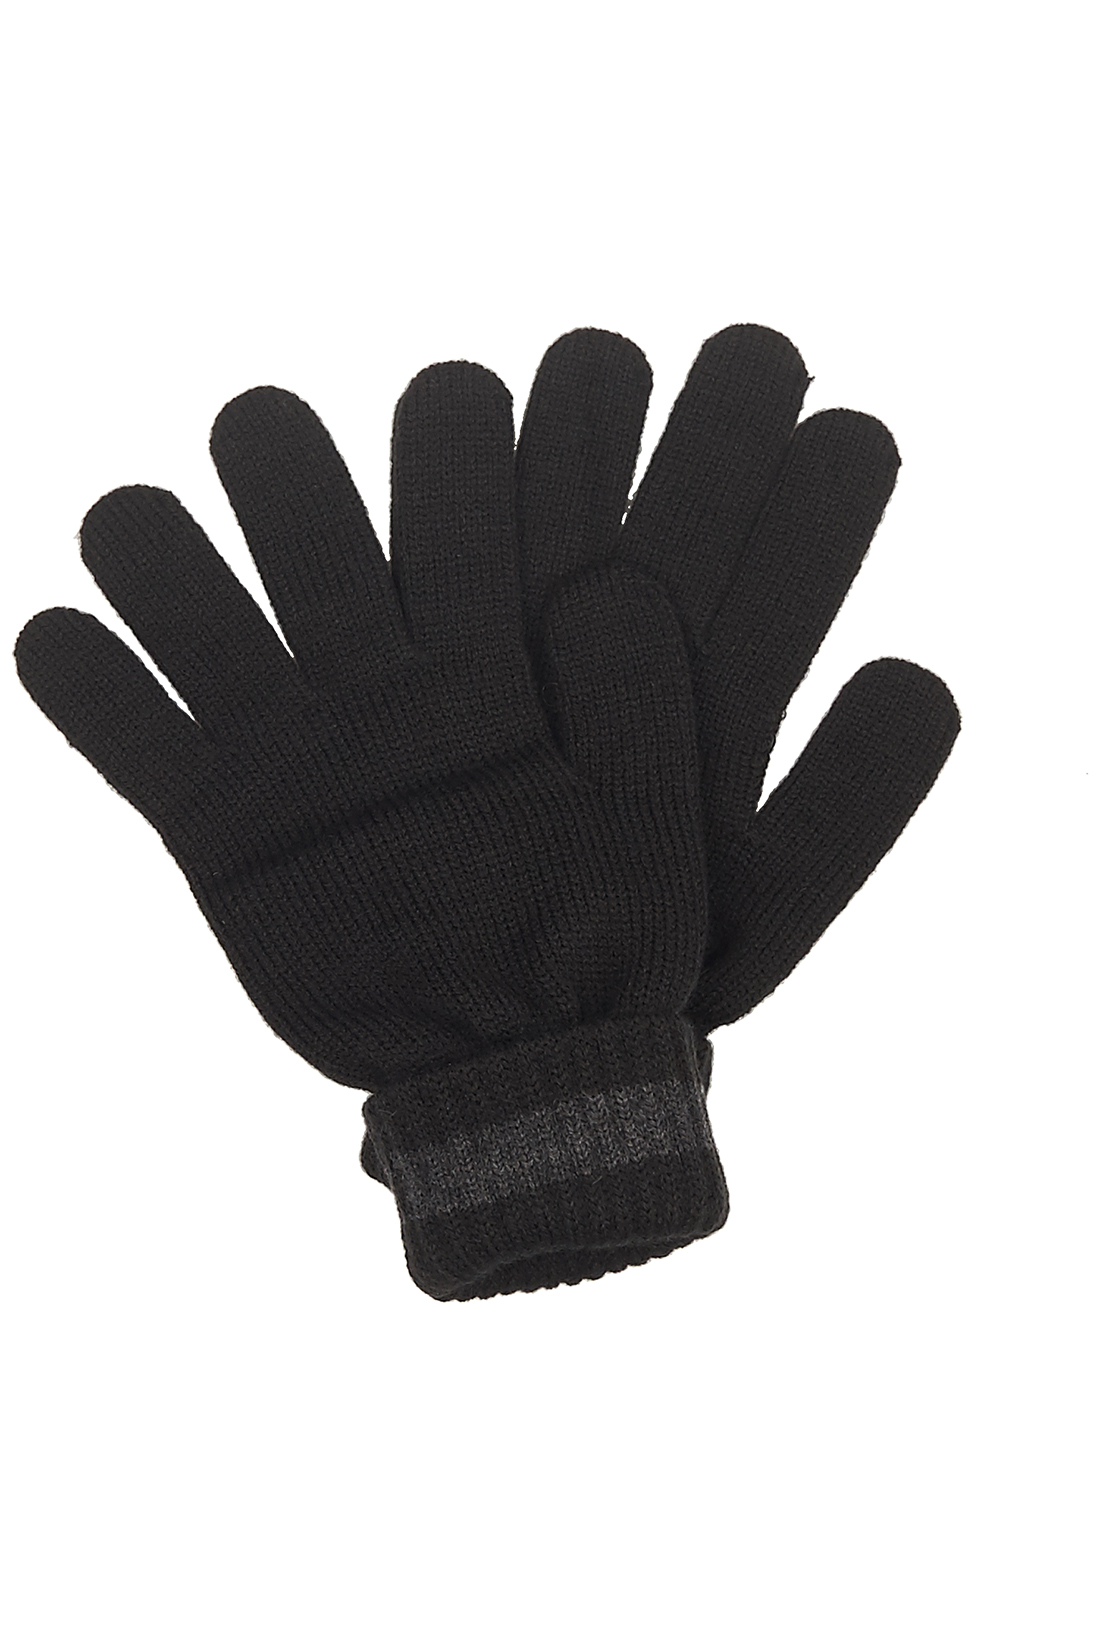 Перчатки с манжетами-отворотами (арт. baon B868502), размер Без/раз, цвет черный Перчатки с манжетами-отворотами (арт. baon B868502) - фото 1